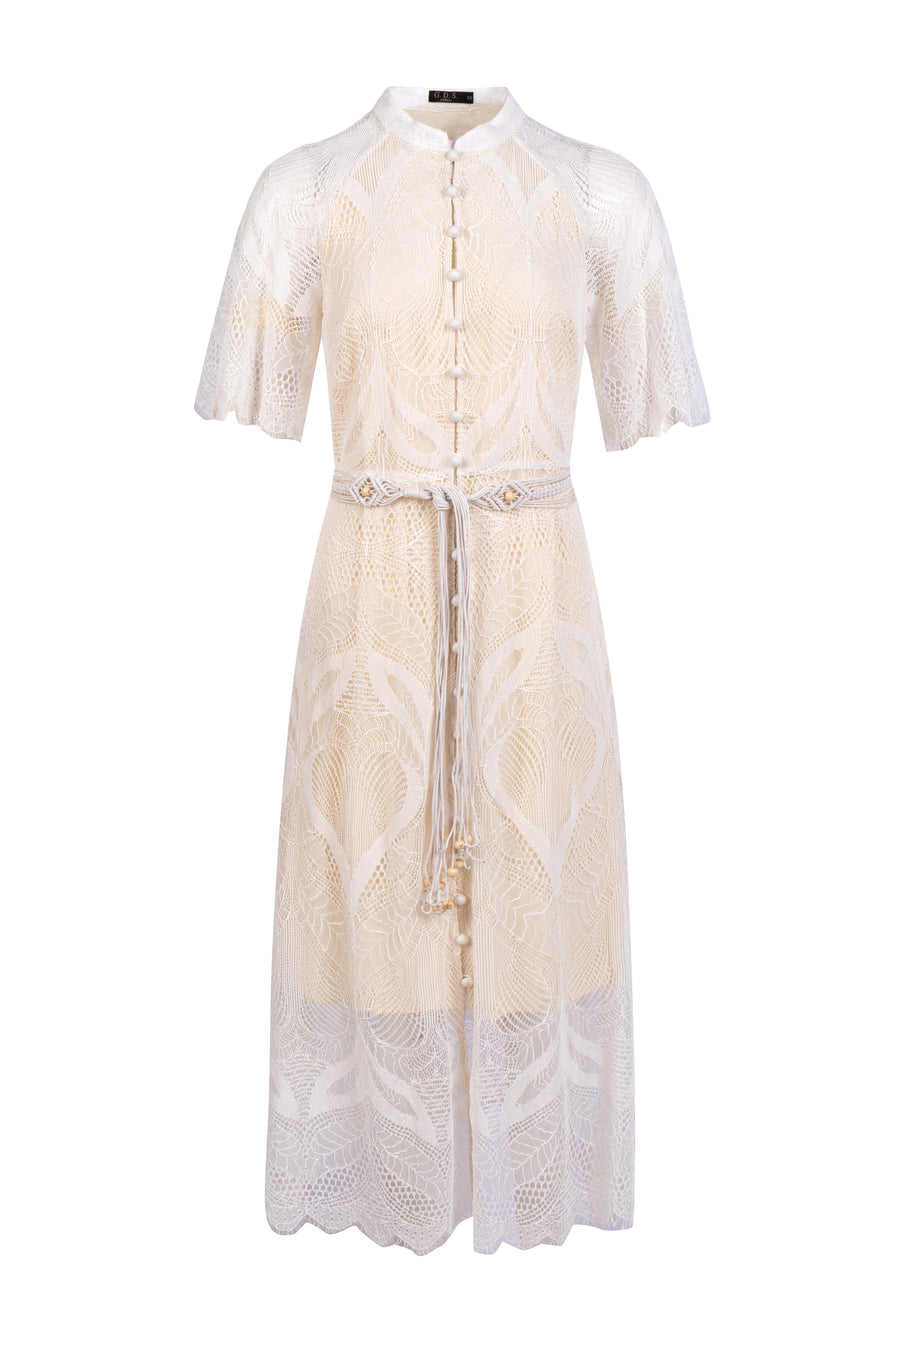 GDS Lilou Lace Long Dress | White Catch ESS22 GDS L M S SALE WHITE XL XS